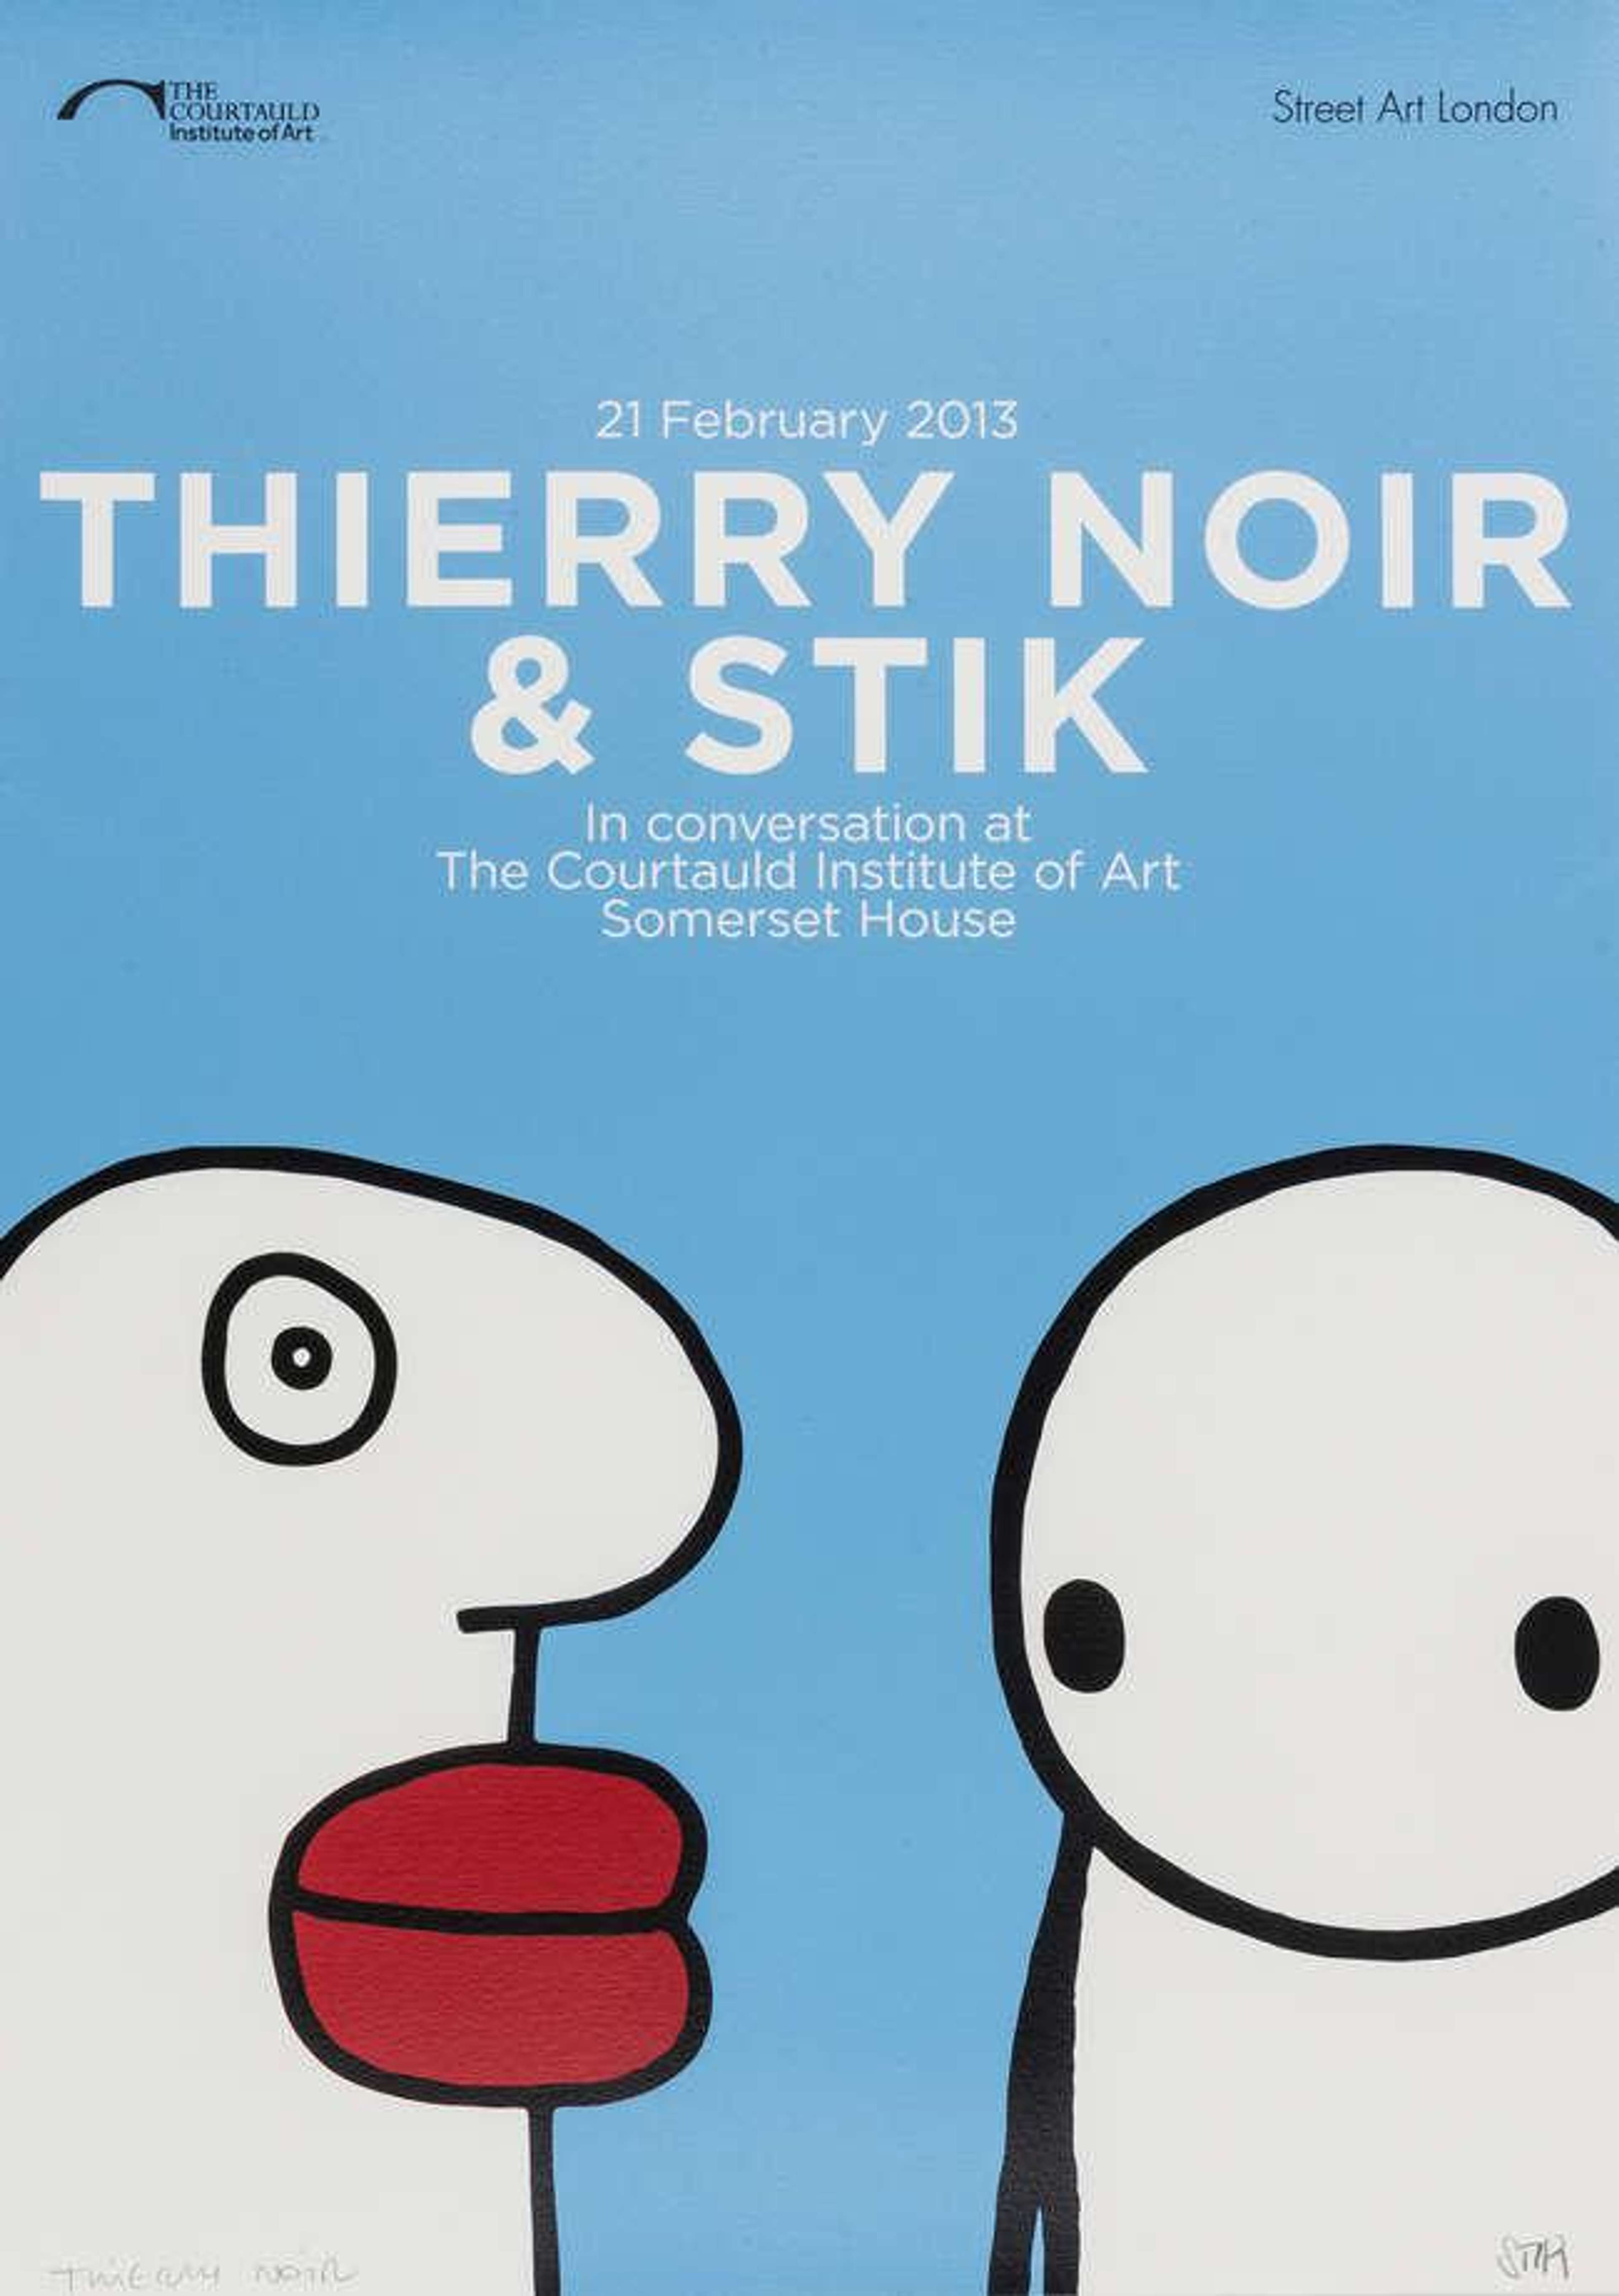 Stik & Thierry Noir In Conversation - Signed Print